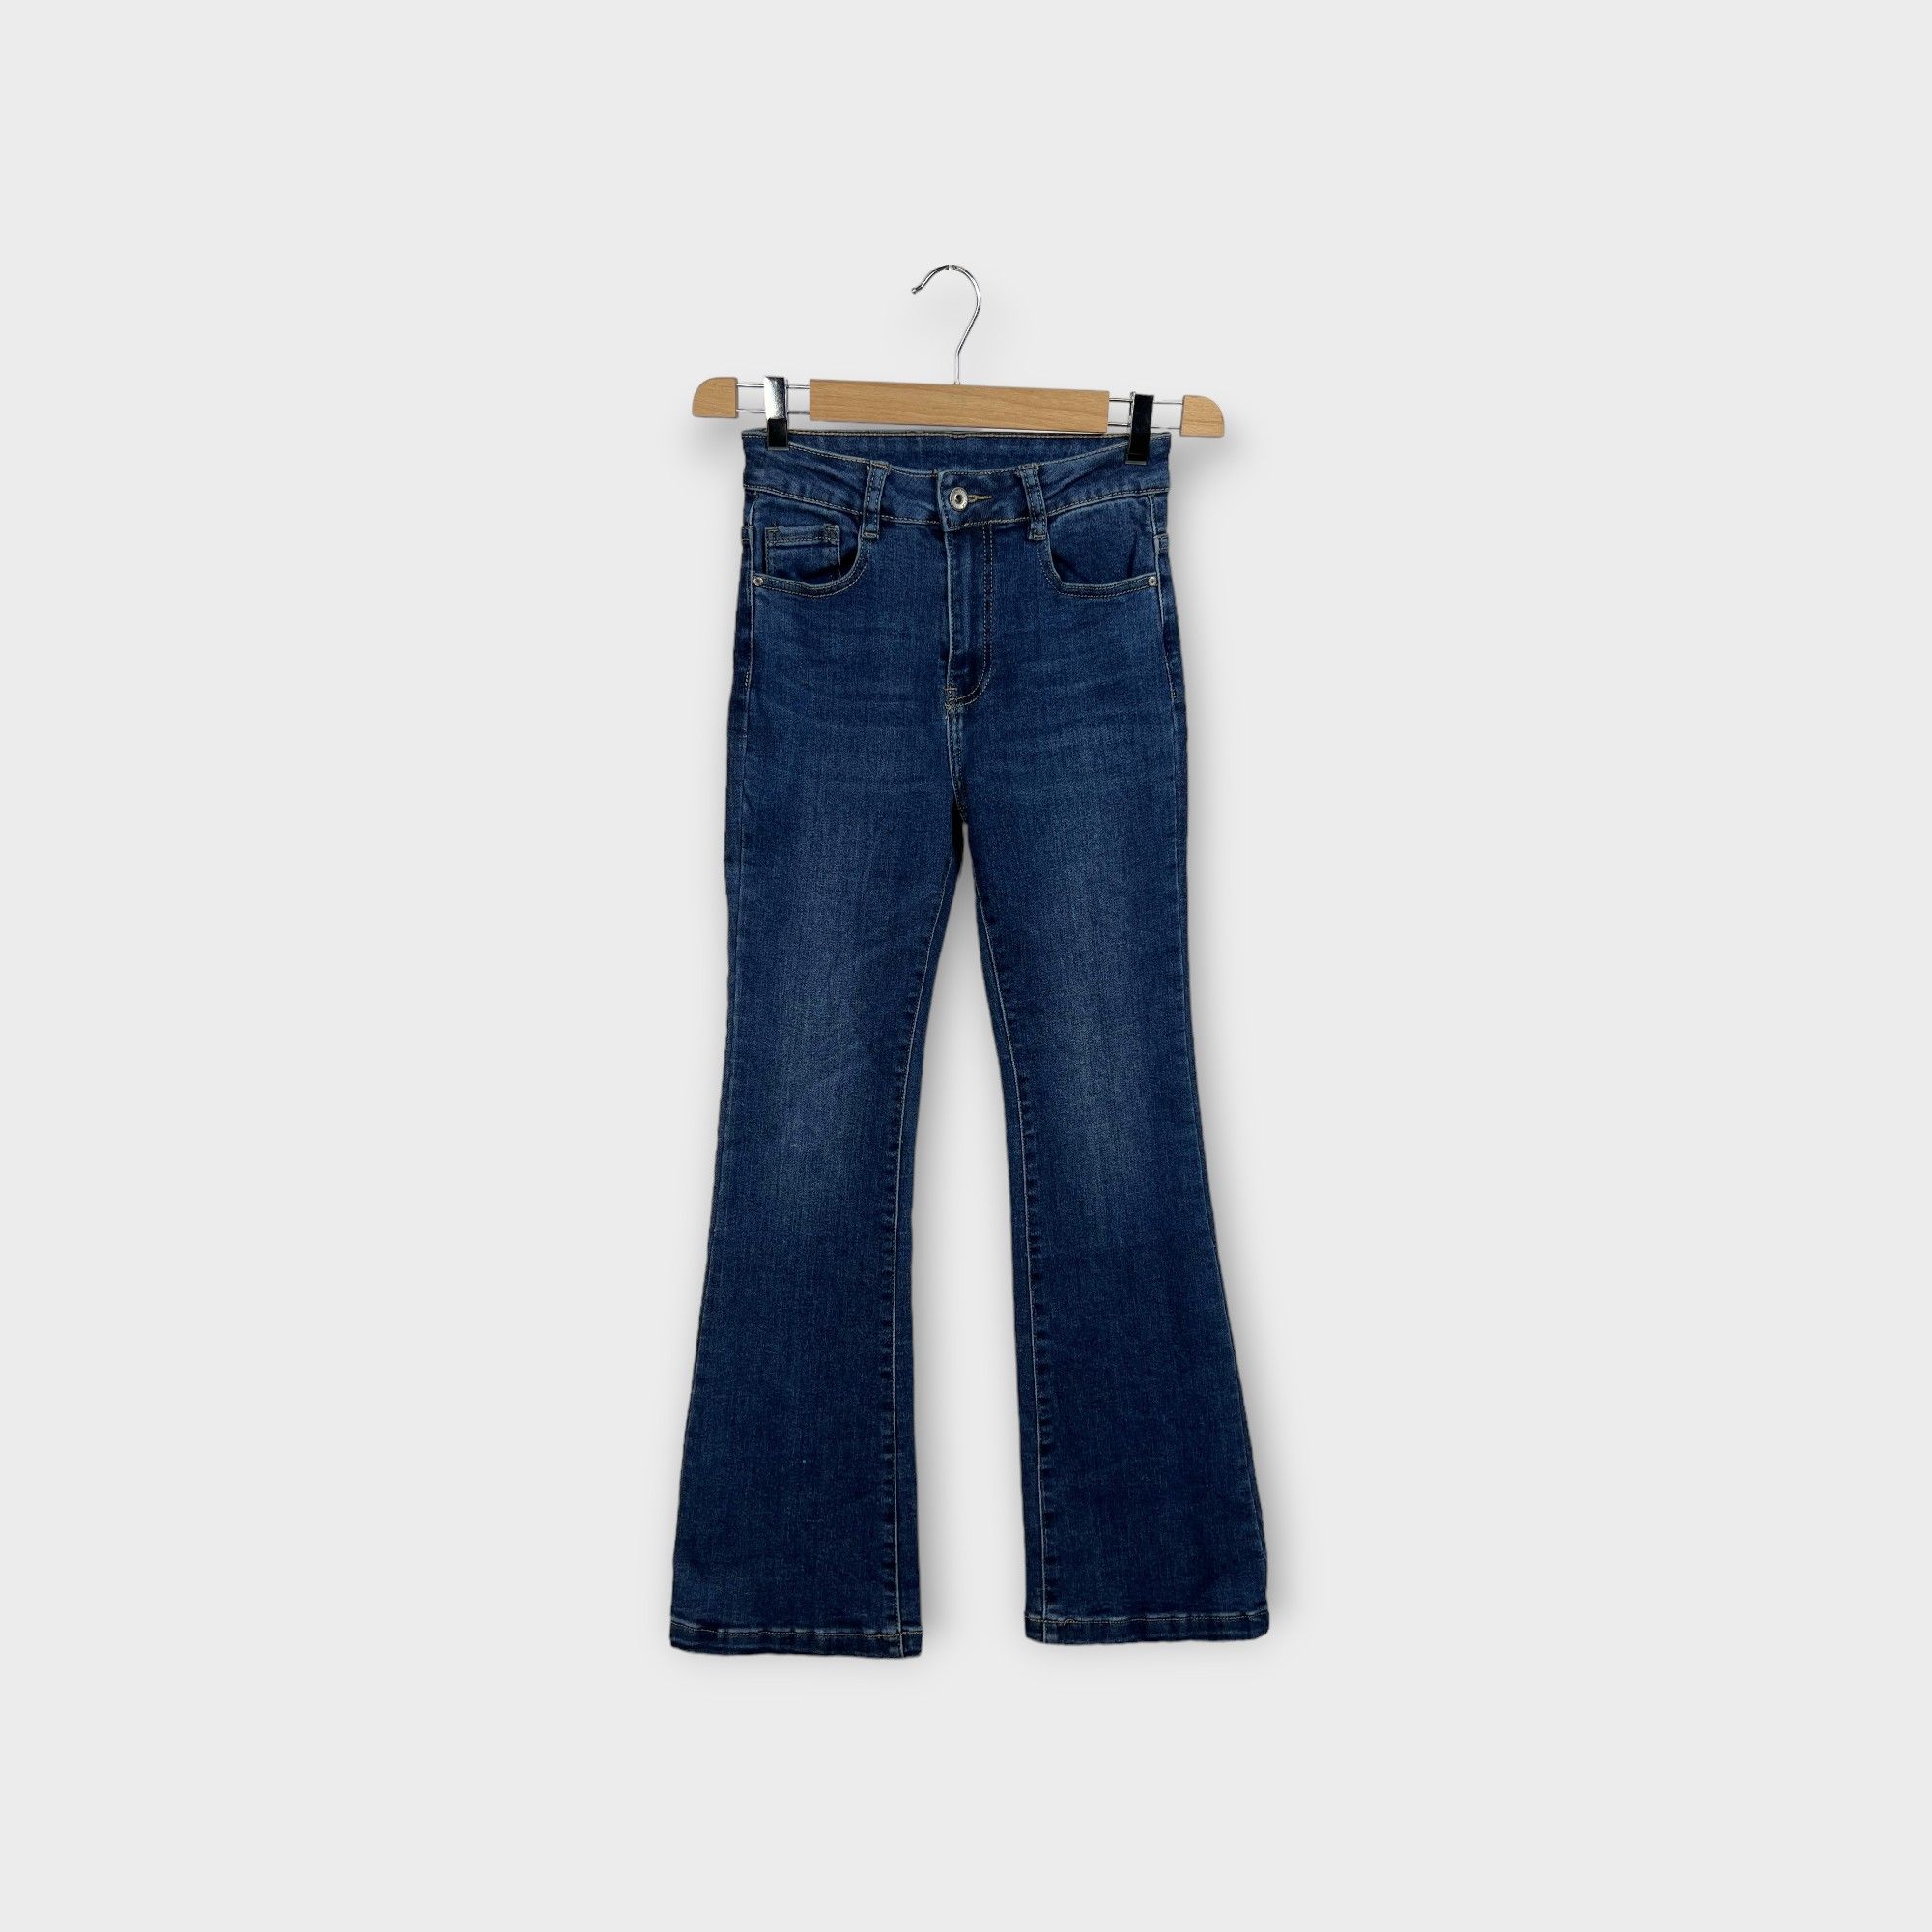 images/virtuemart/product/HELLEH jeans donna modello a zampetta super stretch colore denim 1.jpg